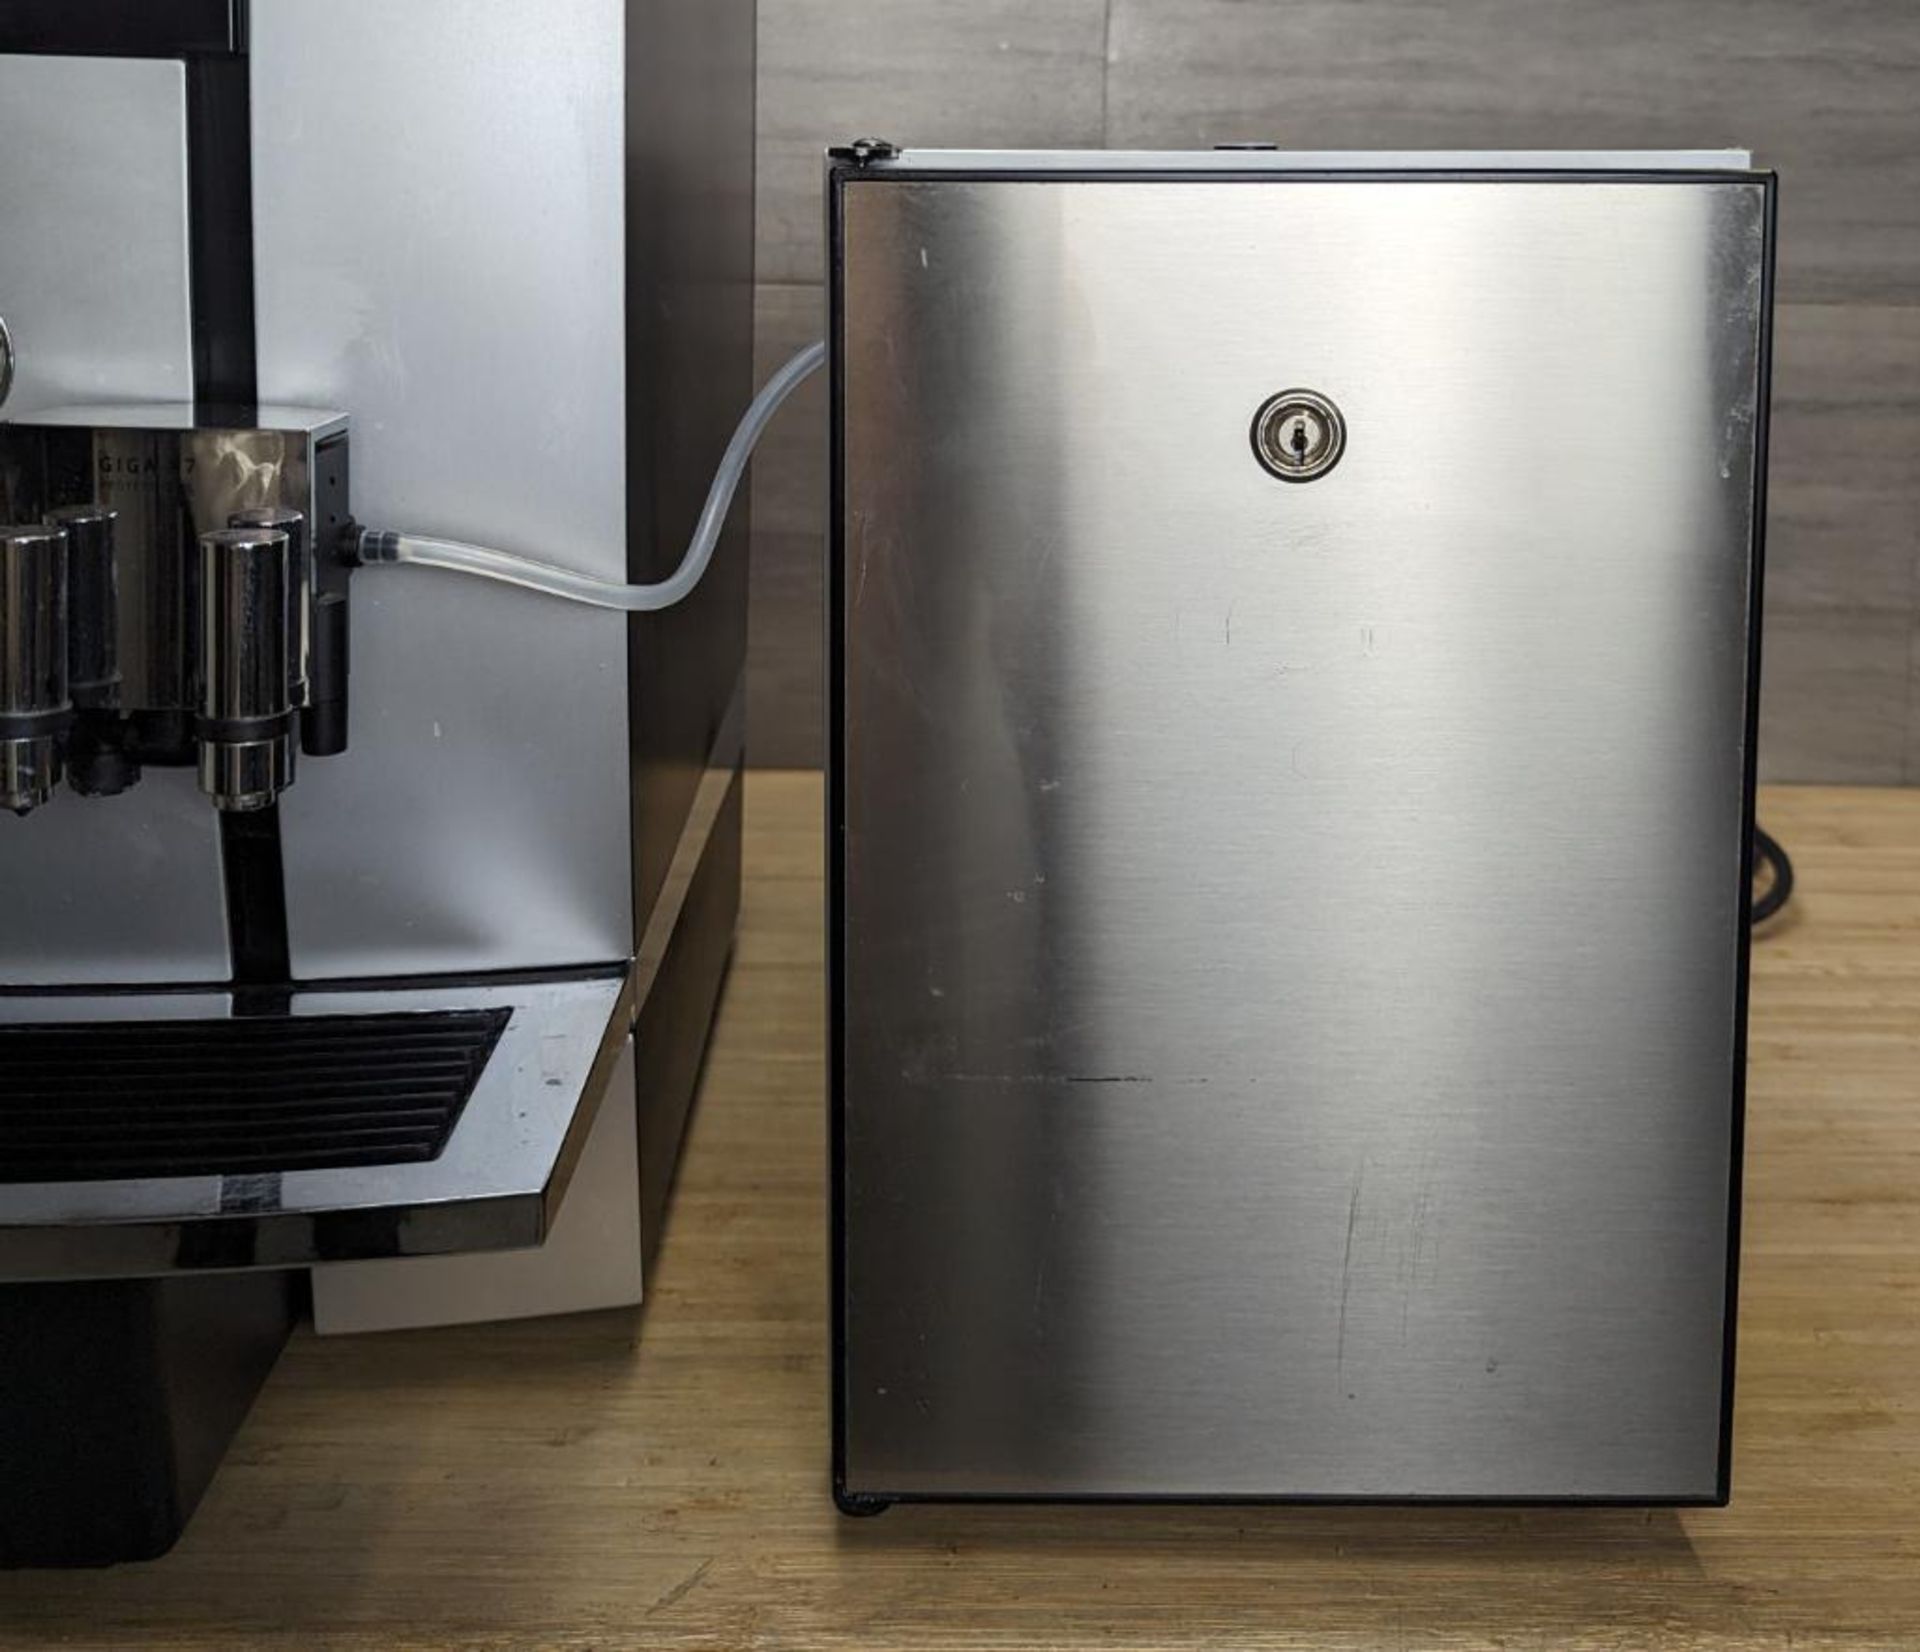 JURA GIGA X7 PROFESSIONAL AUTOMATIC COFFEE MACHINE WITH MILK COOLER - Image 12 of 16